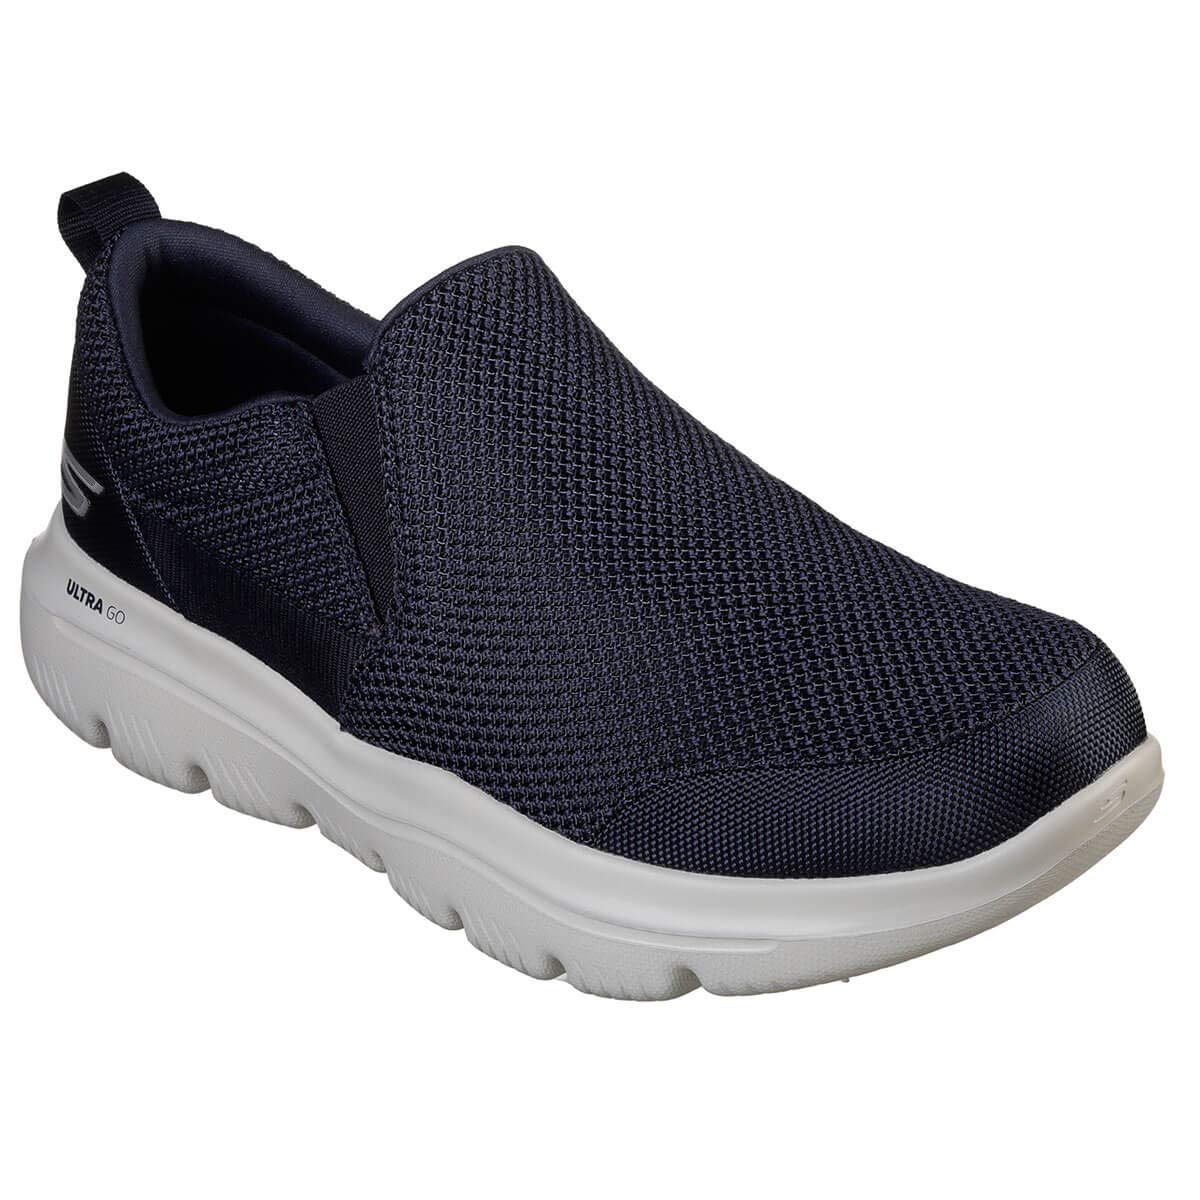 Skechers Men's Go Walk Evolution Ultra-Impeccable Sneaker